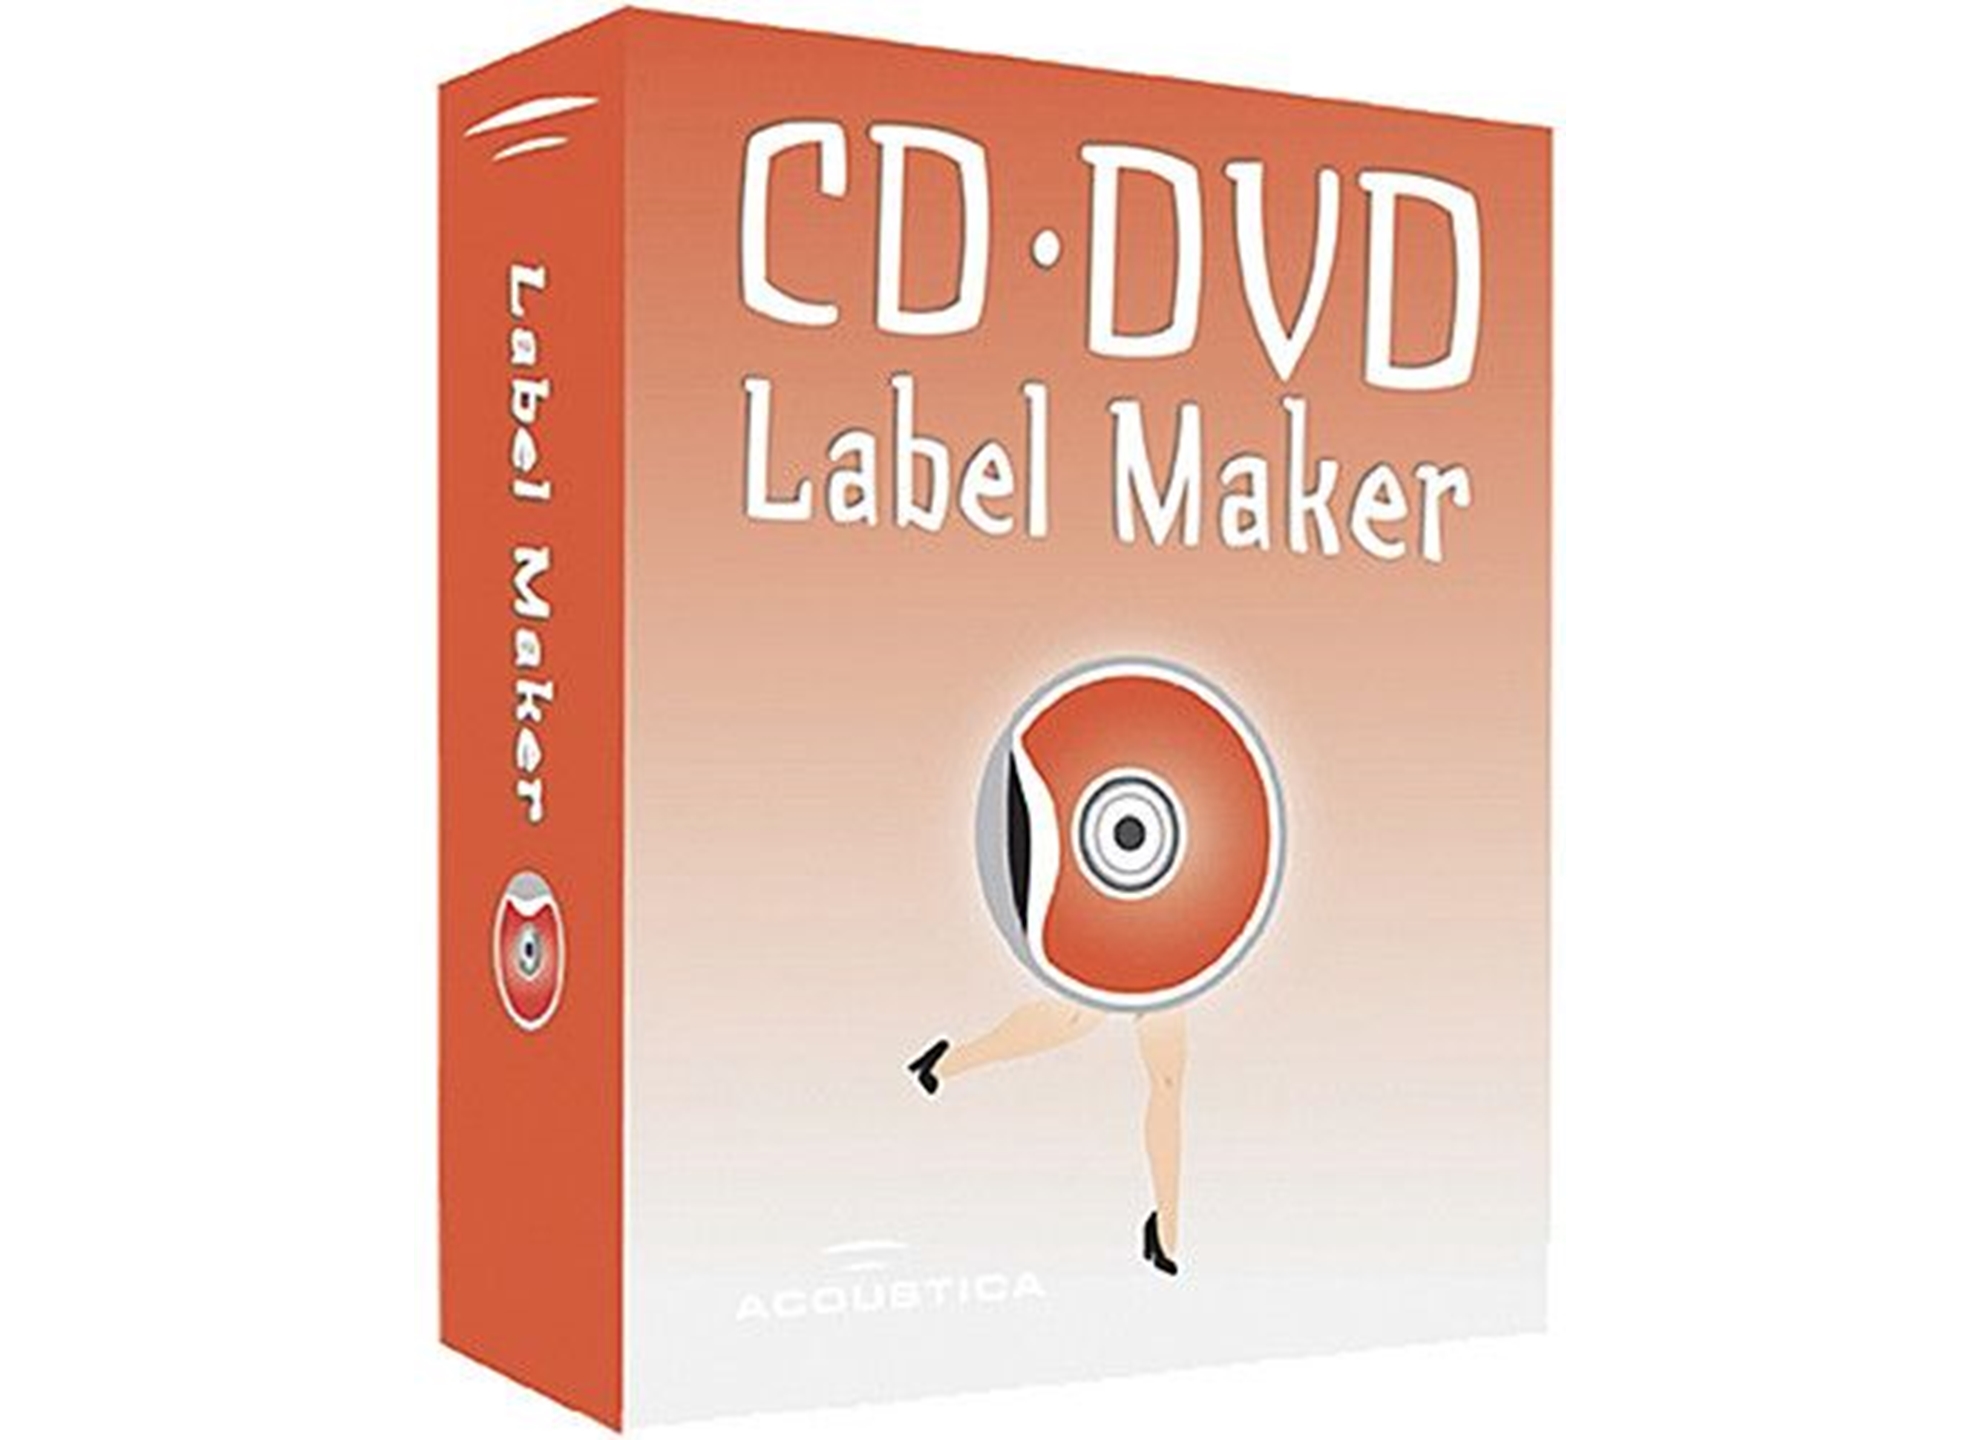 accoustica cd dvd label maker